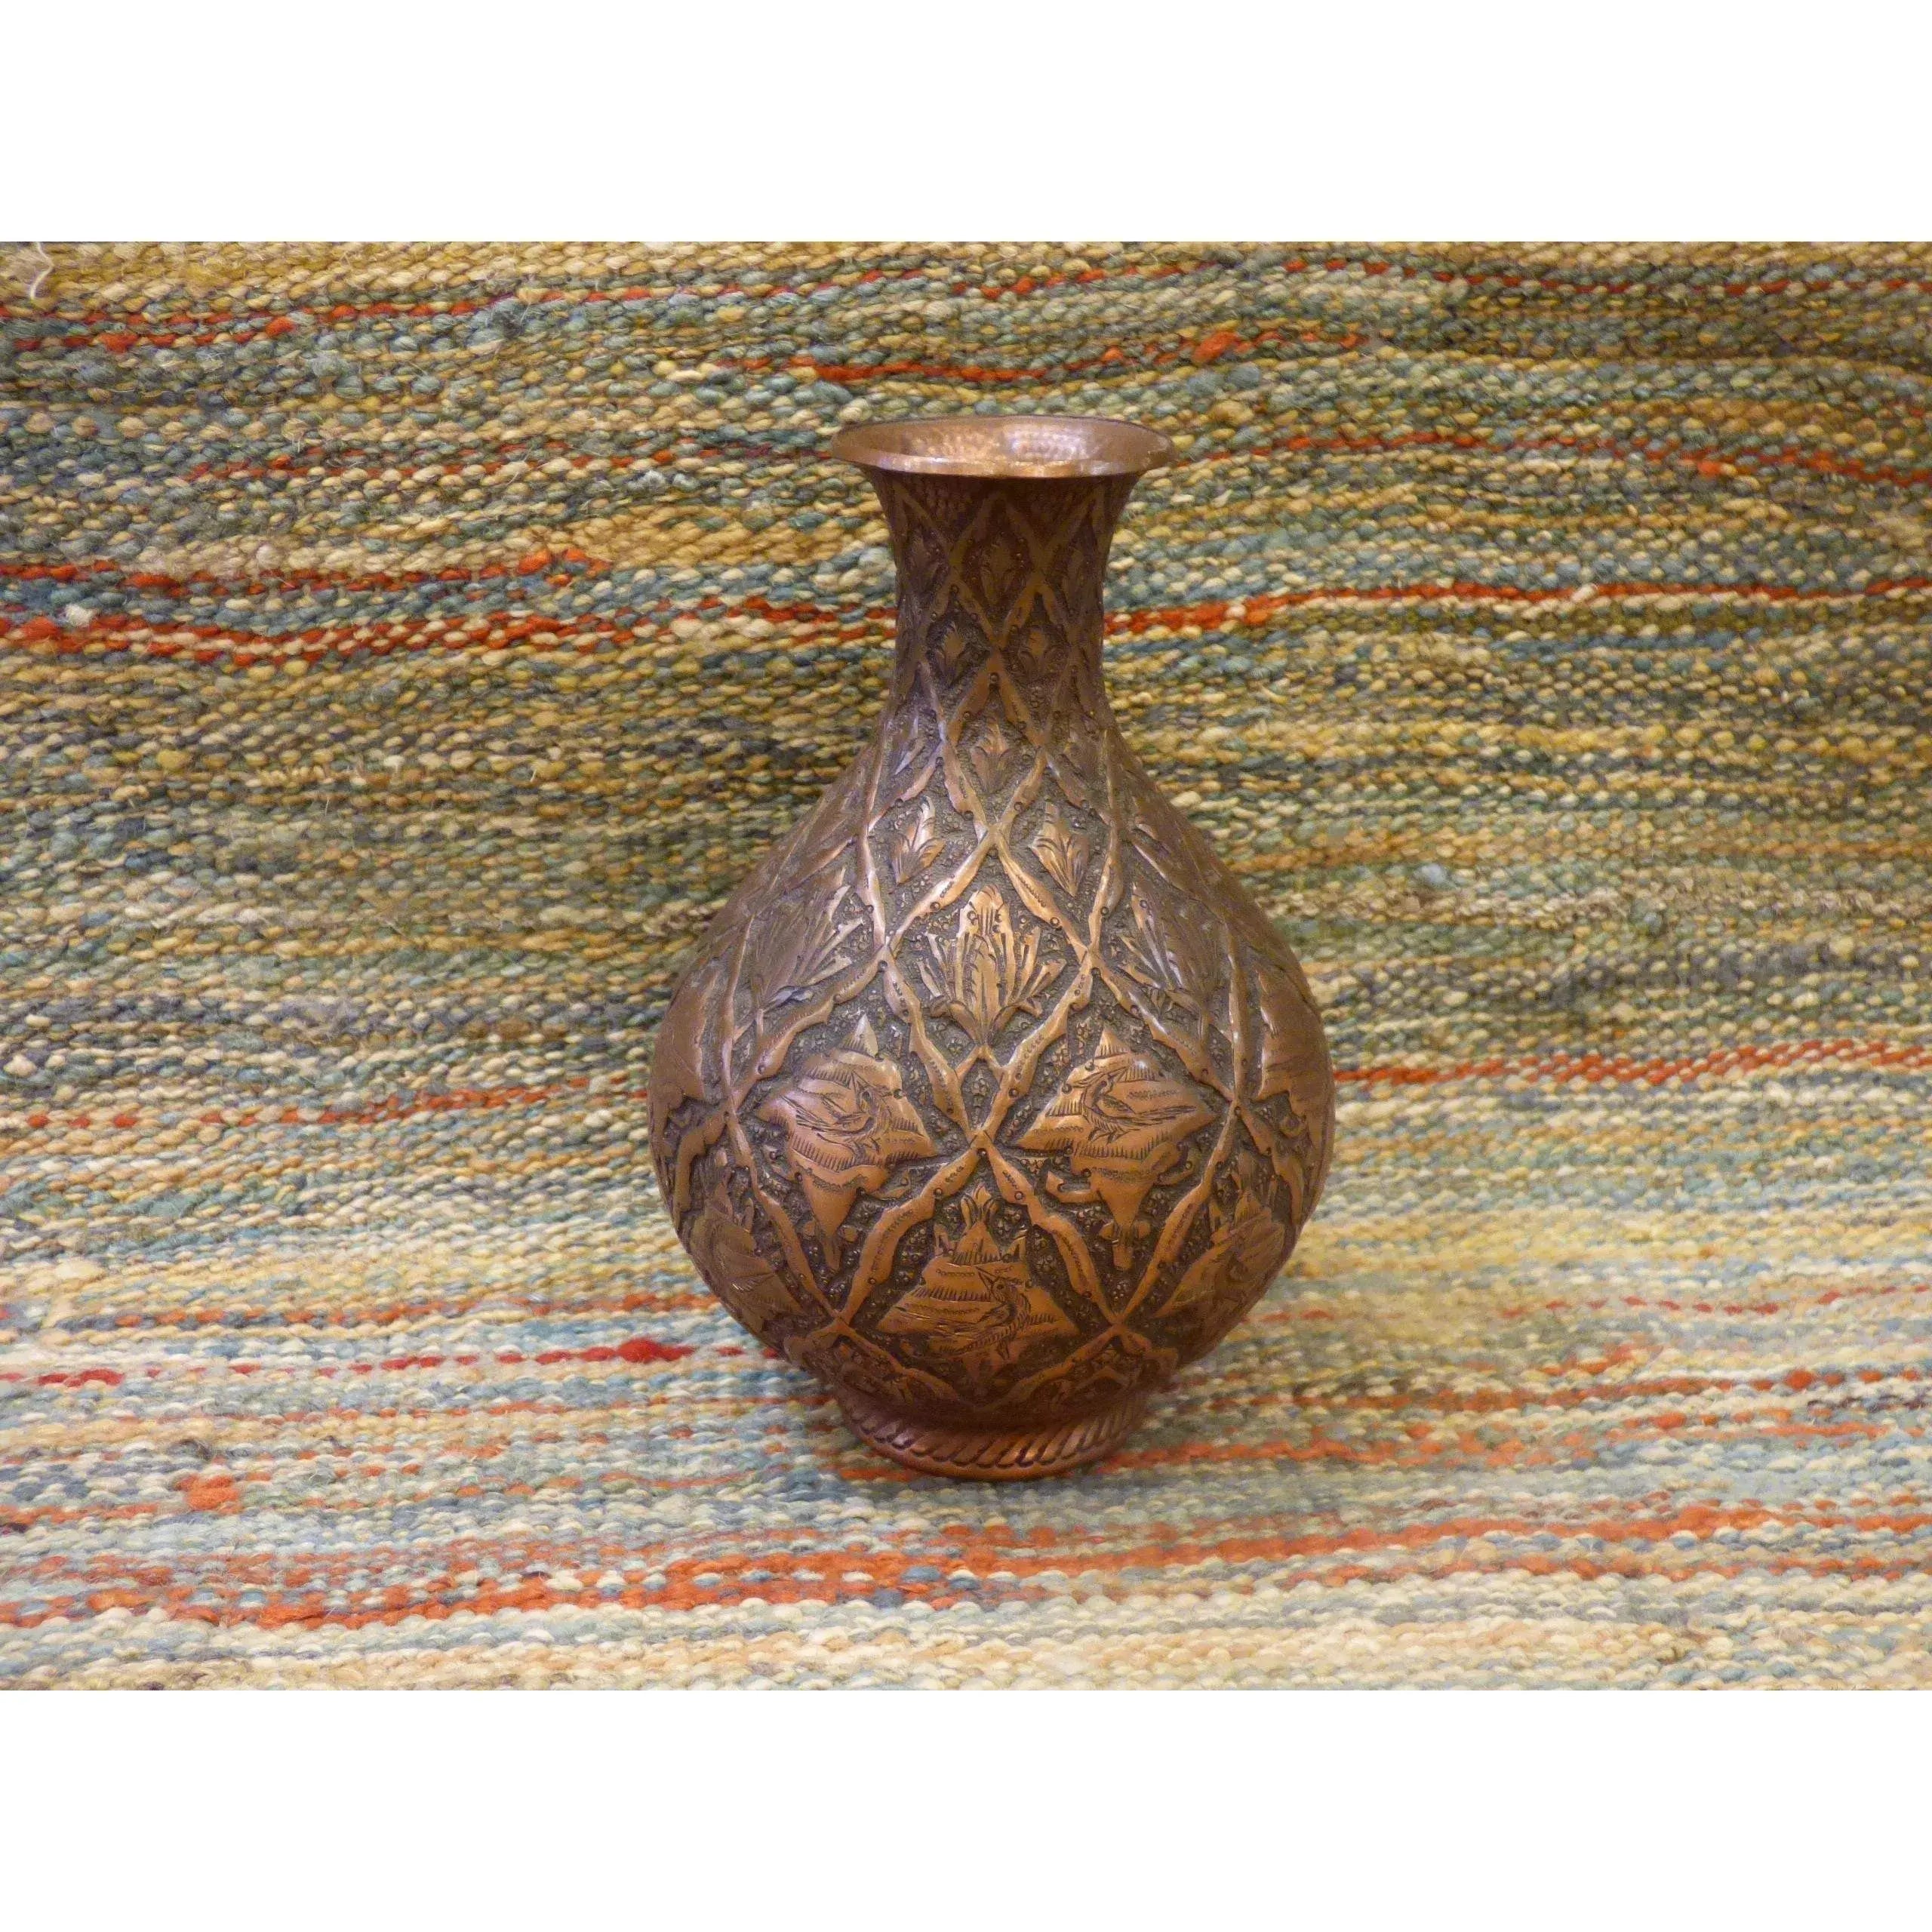 Authentic Art Antique Persian Engraved Brass Vase Ghalamzani 7" X 5" Abcca0113